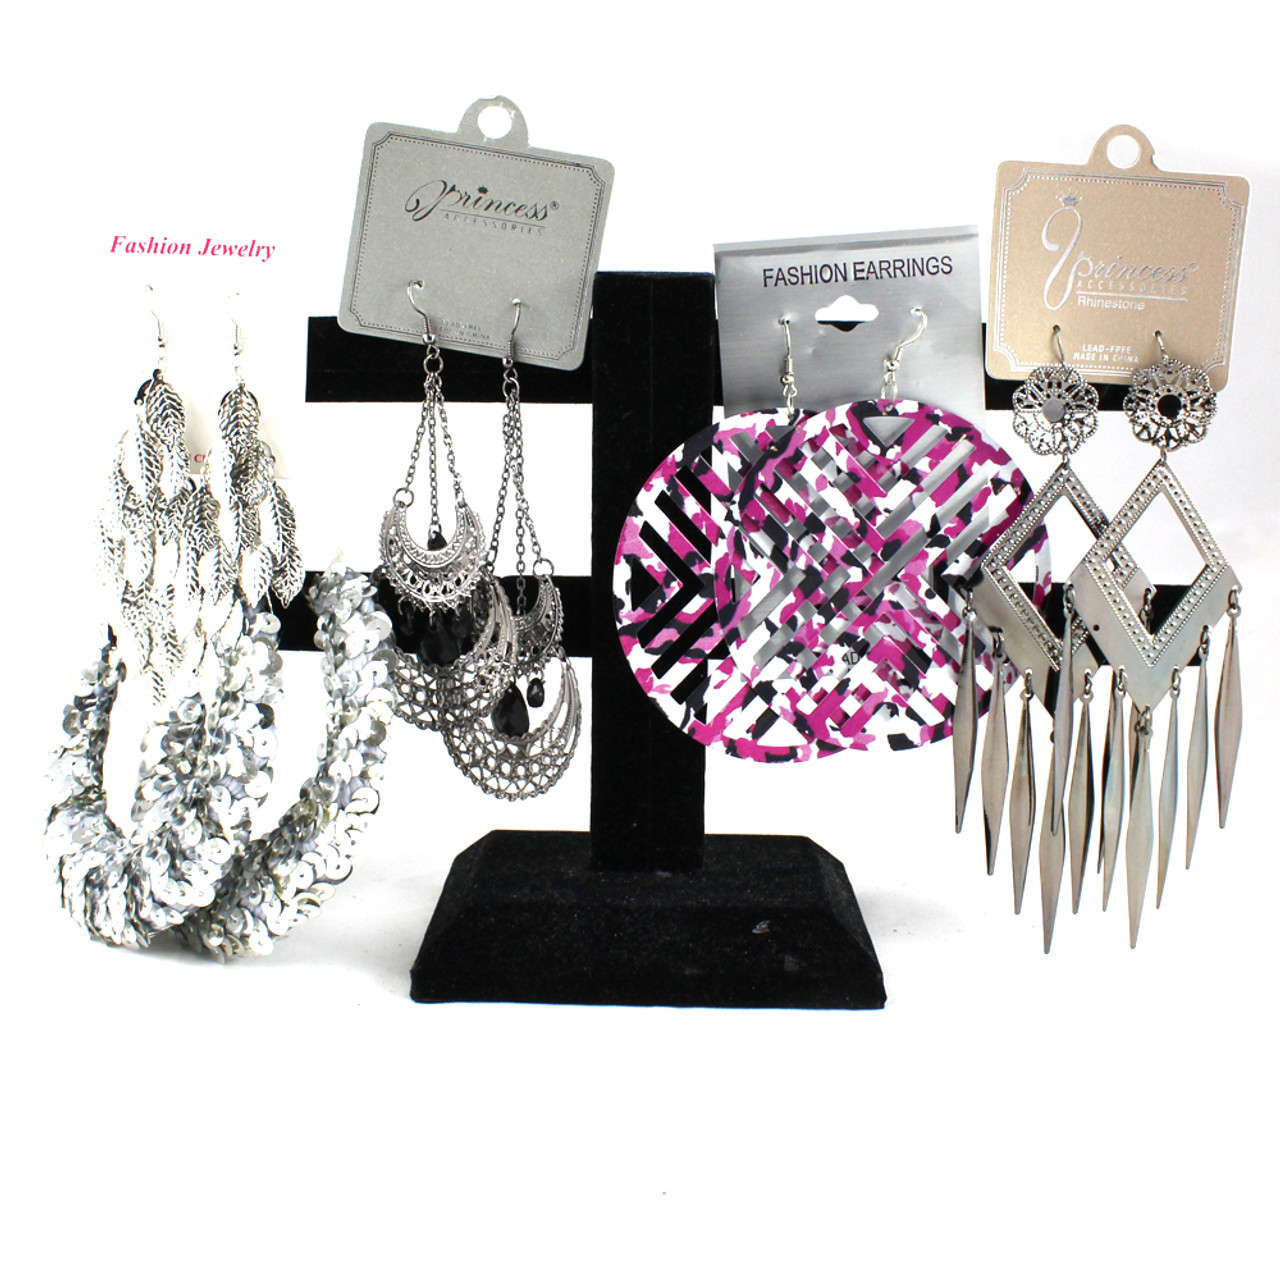 Fashion Earrings, Accessories for Women